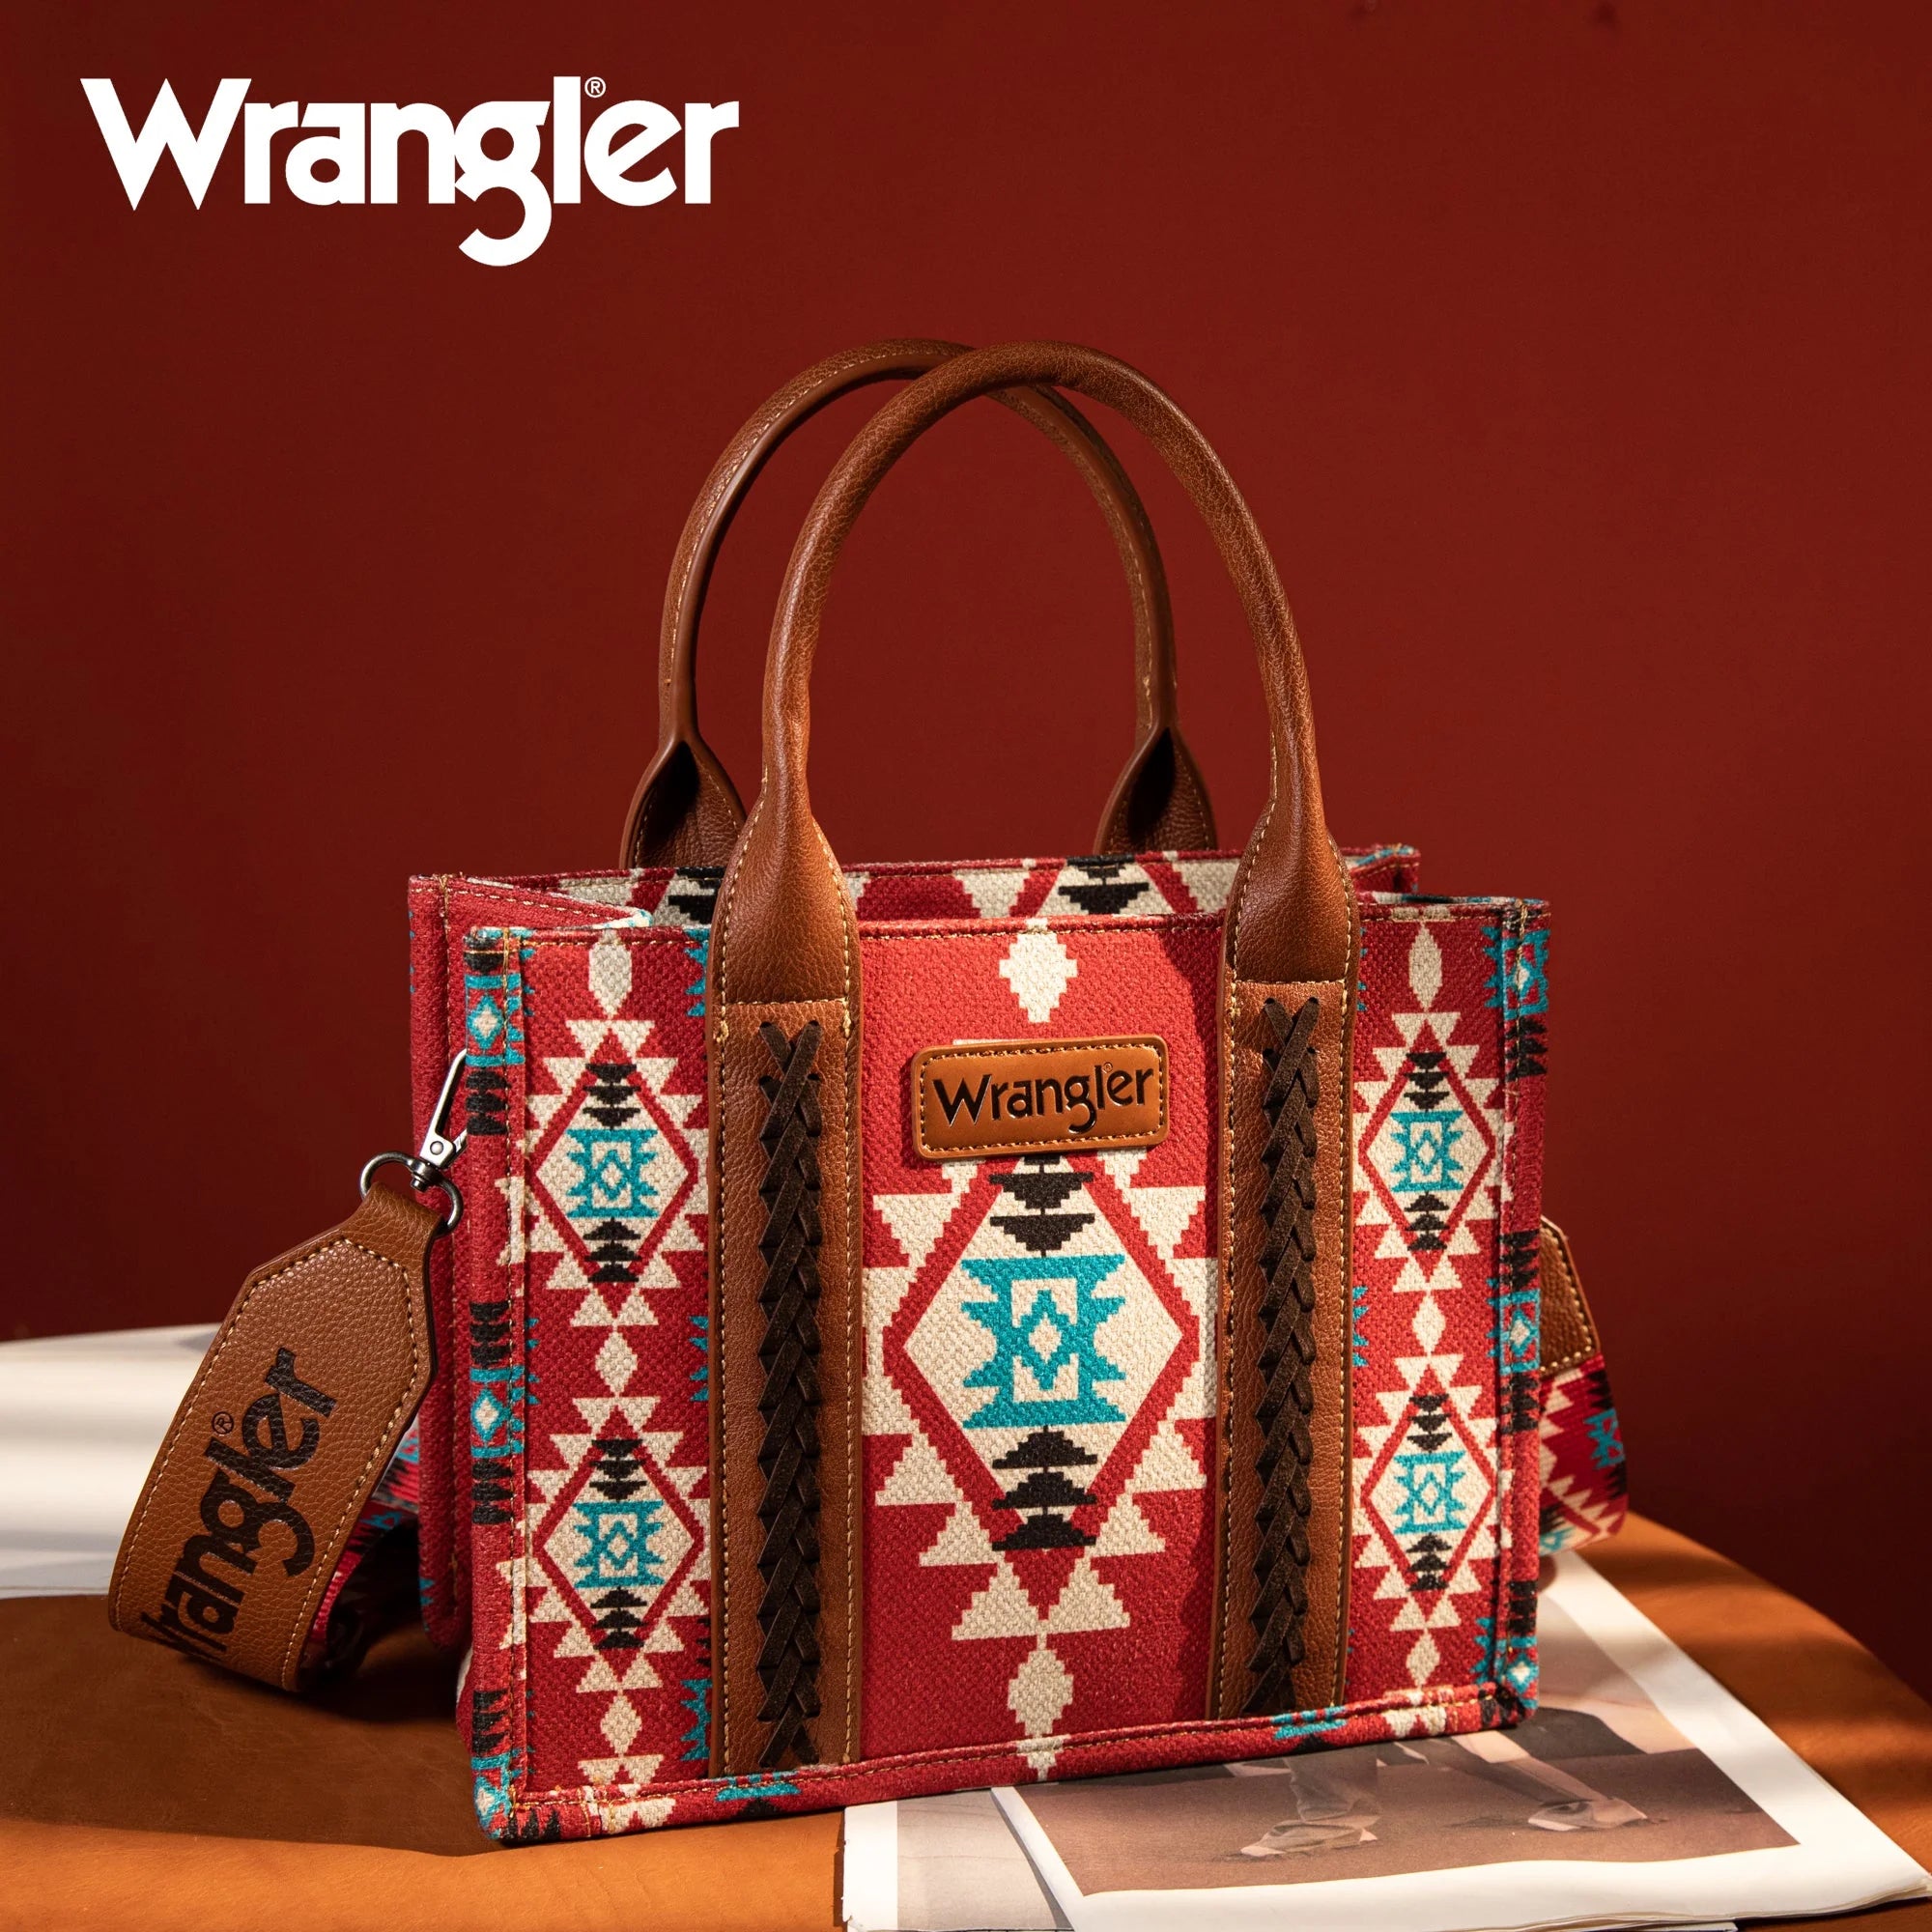 Western Embroidered Rhinestone Cross Purse Handbag Wallet Set in 2 Colors -  Walmart.com